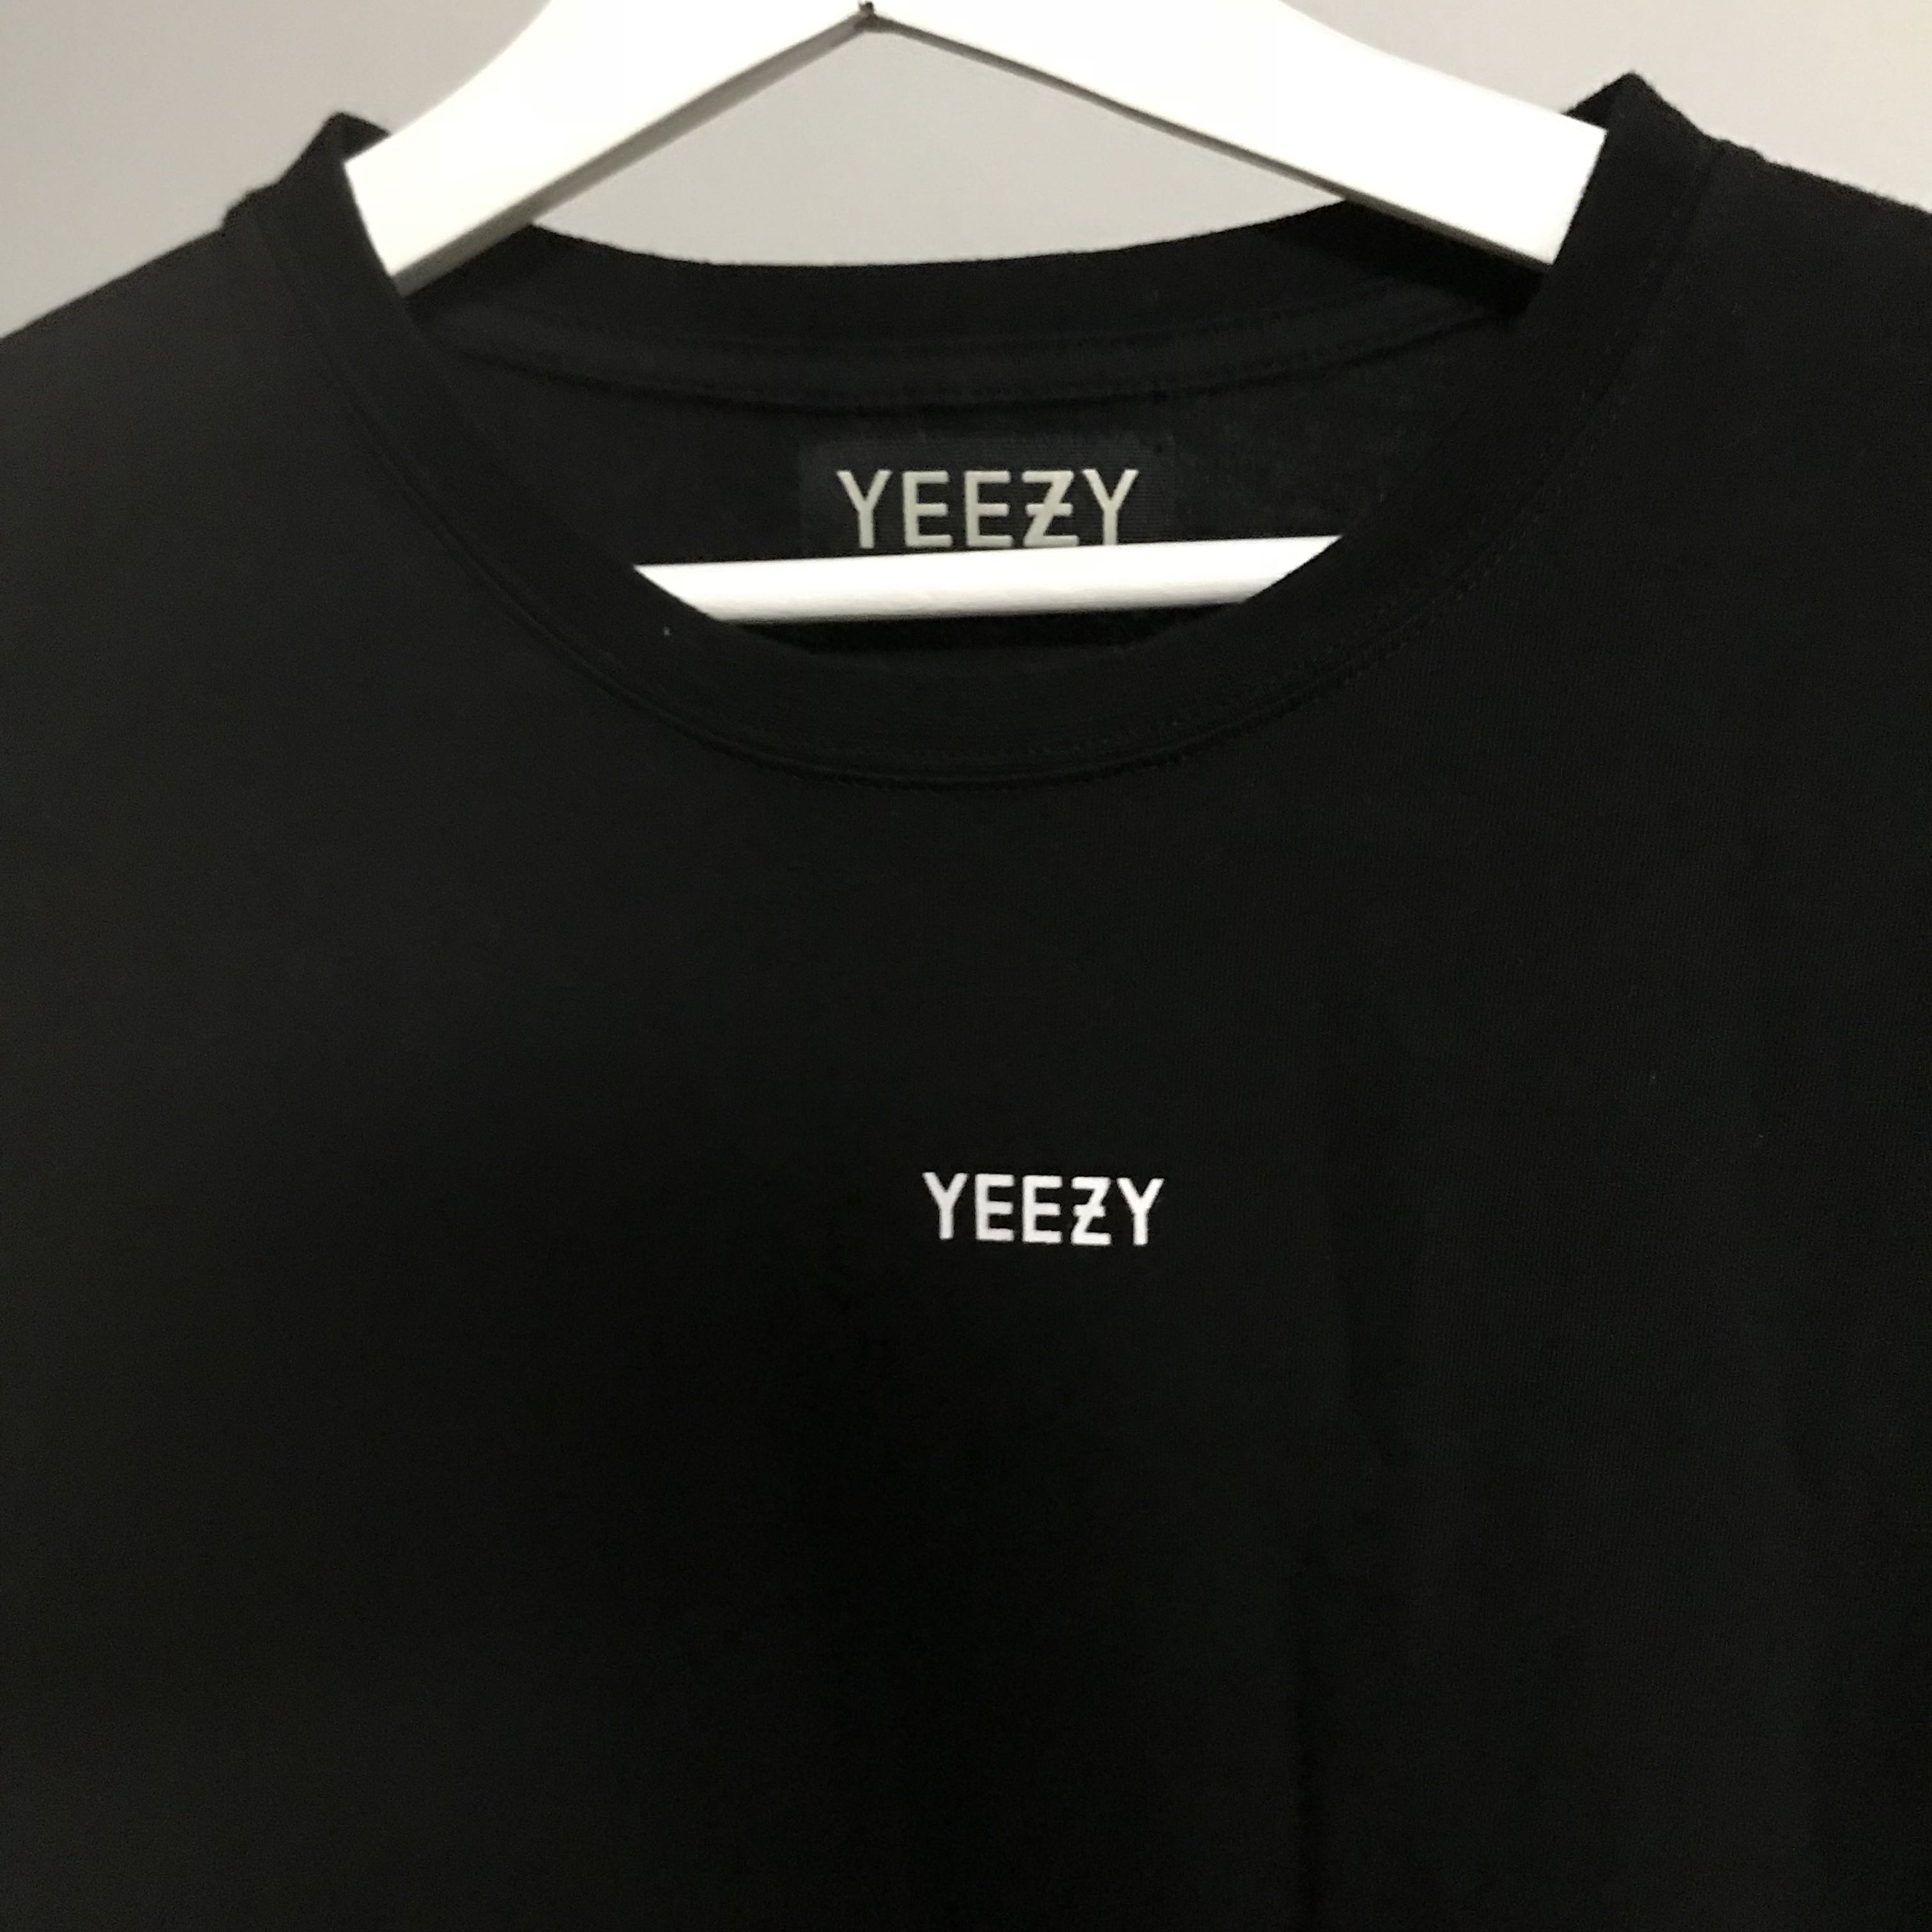 Yeezy t shirt, Men's Fashion, Clothes 